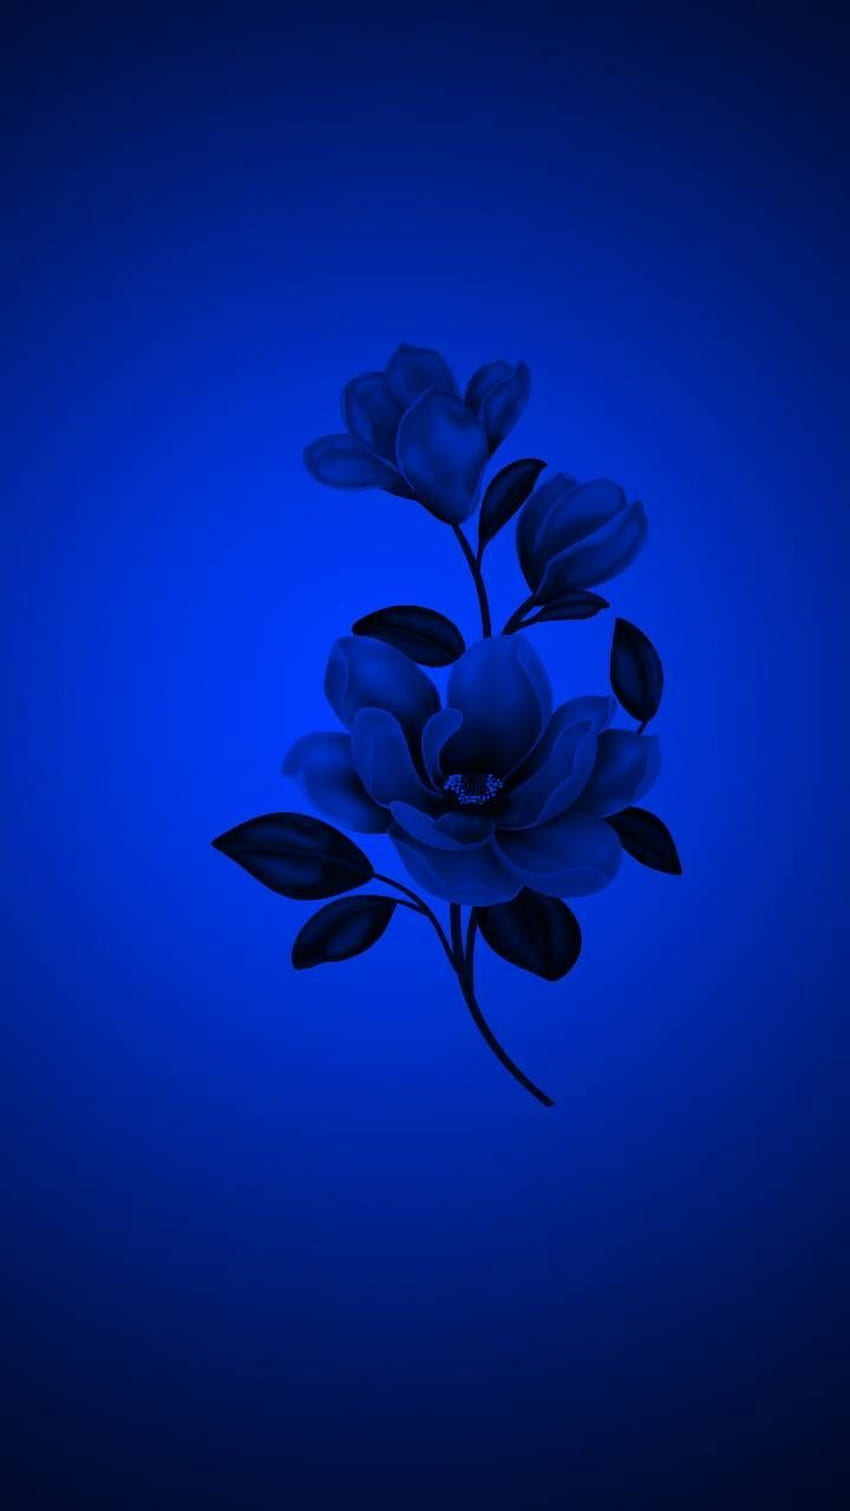 Free download 98 Best Royal blue wallpaper ideas blue wallpapers royal blue  1242x1656 for your Desktop Mobile  Tablet  Explore 26 Dark Royal Blue  Wallpapers  Dark Blue Backgrounds Royal Blue